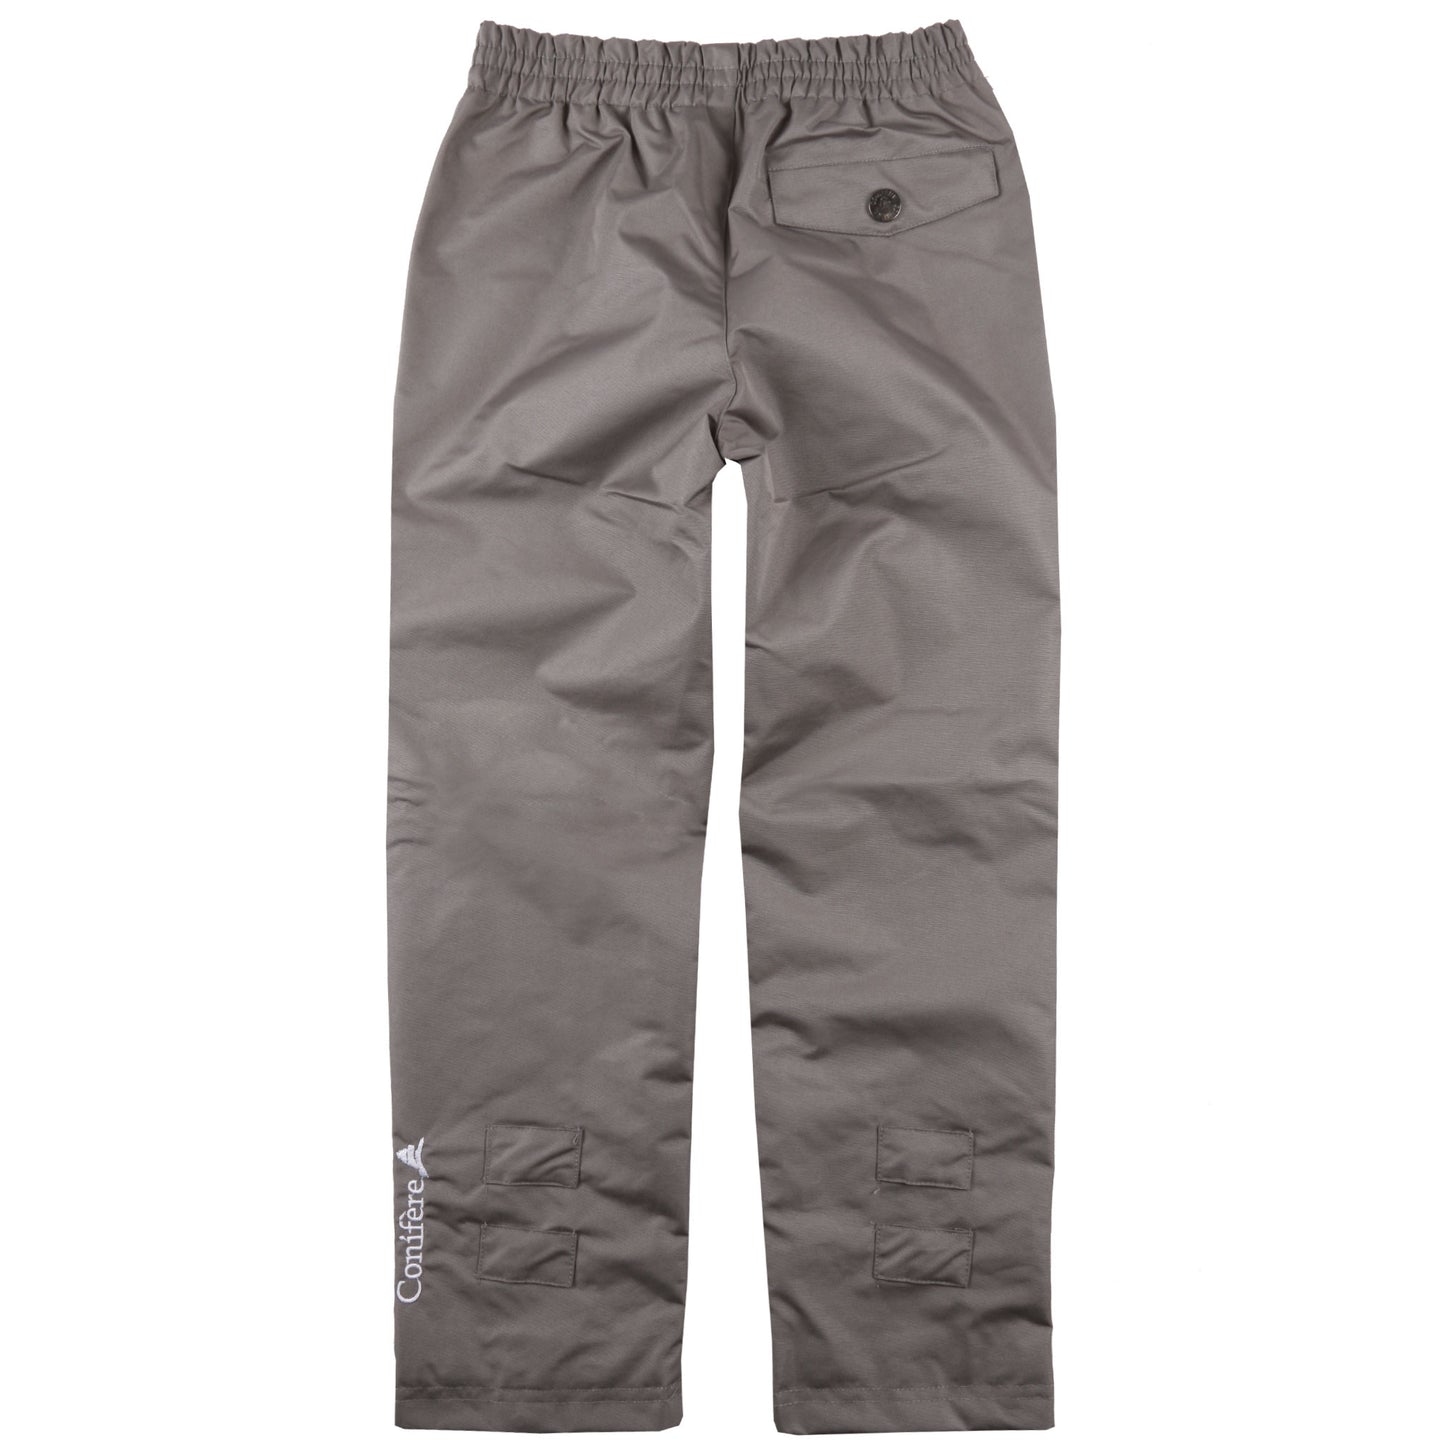 Grey Unisex Kids Splash Pants